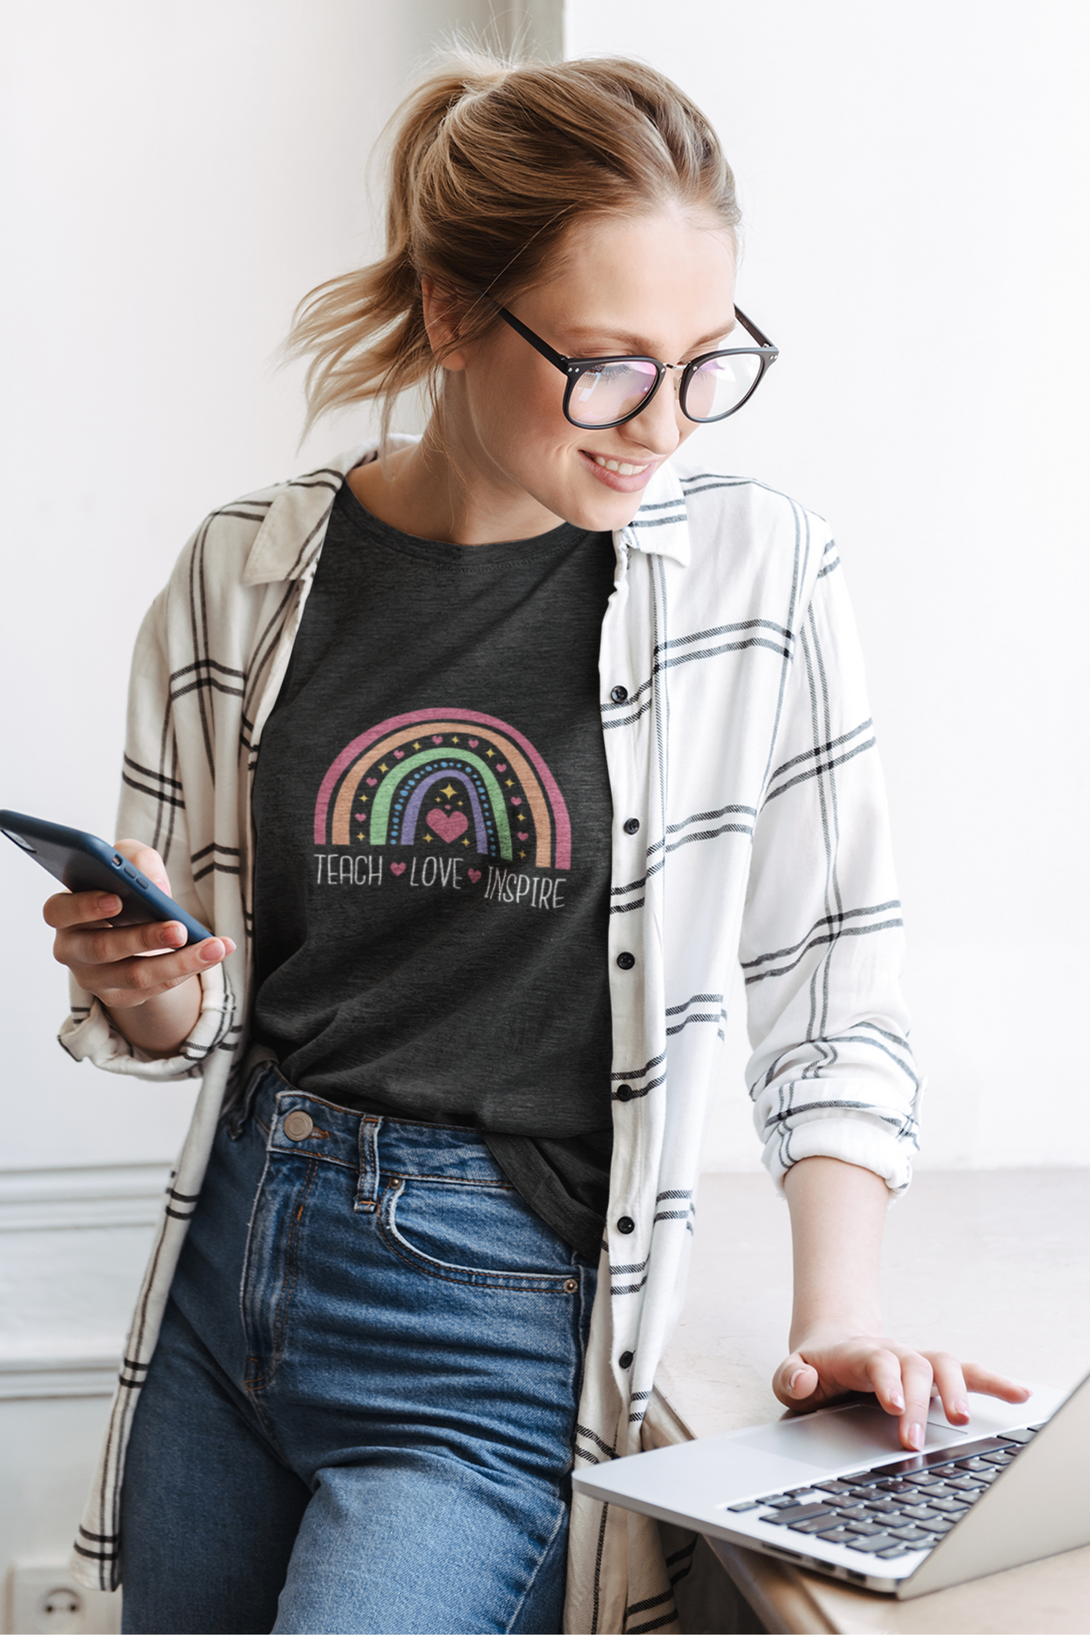 Teach, Love, Inspire Printed T-Shirt For Women - WowWaves